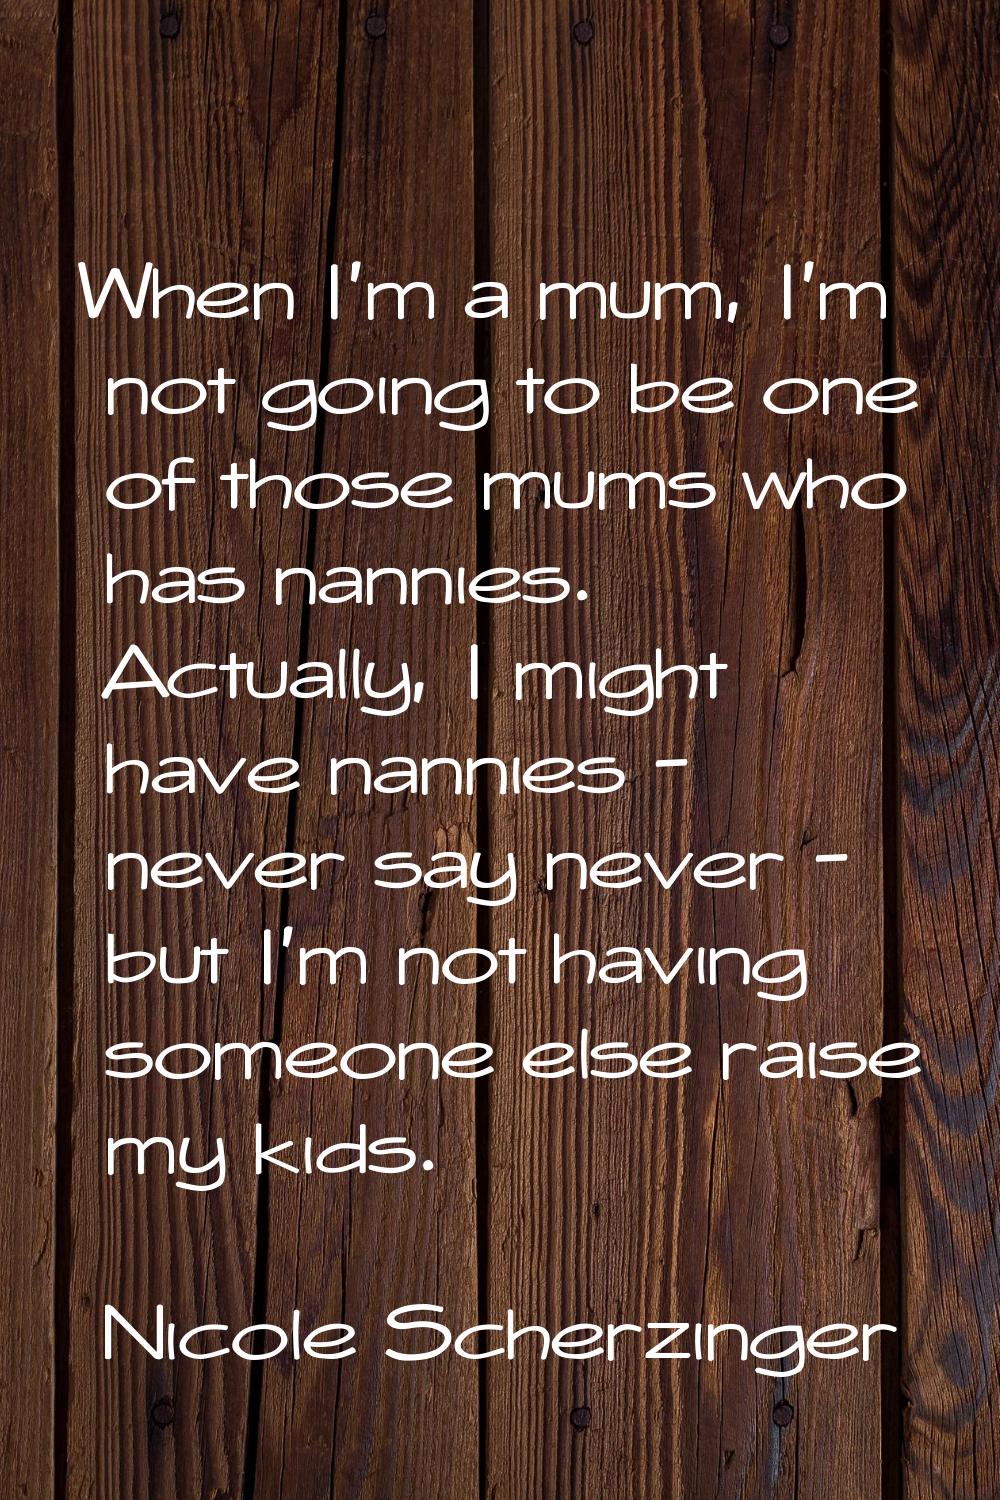 When I'm a mum, I'm not going to be one of those mums who has nannies. Actually, I might have nanni